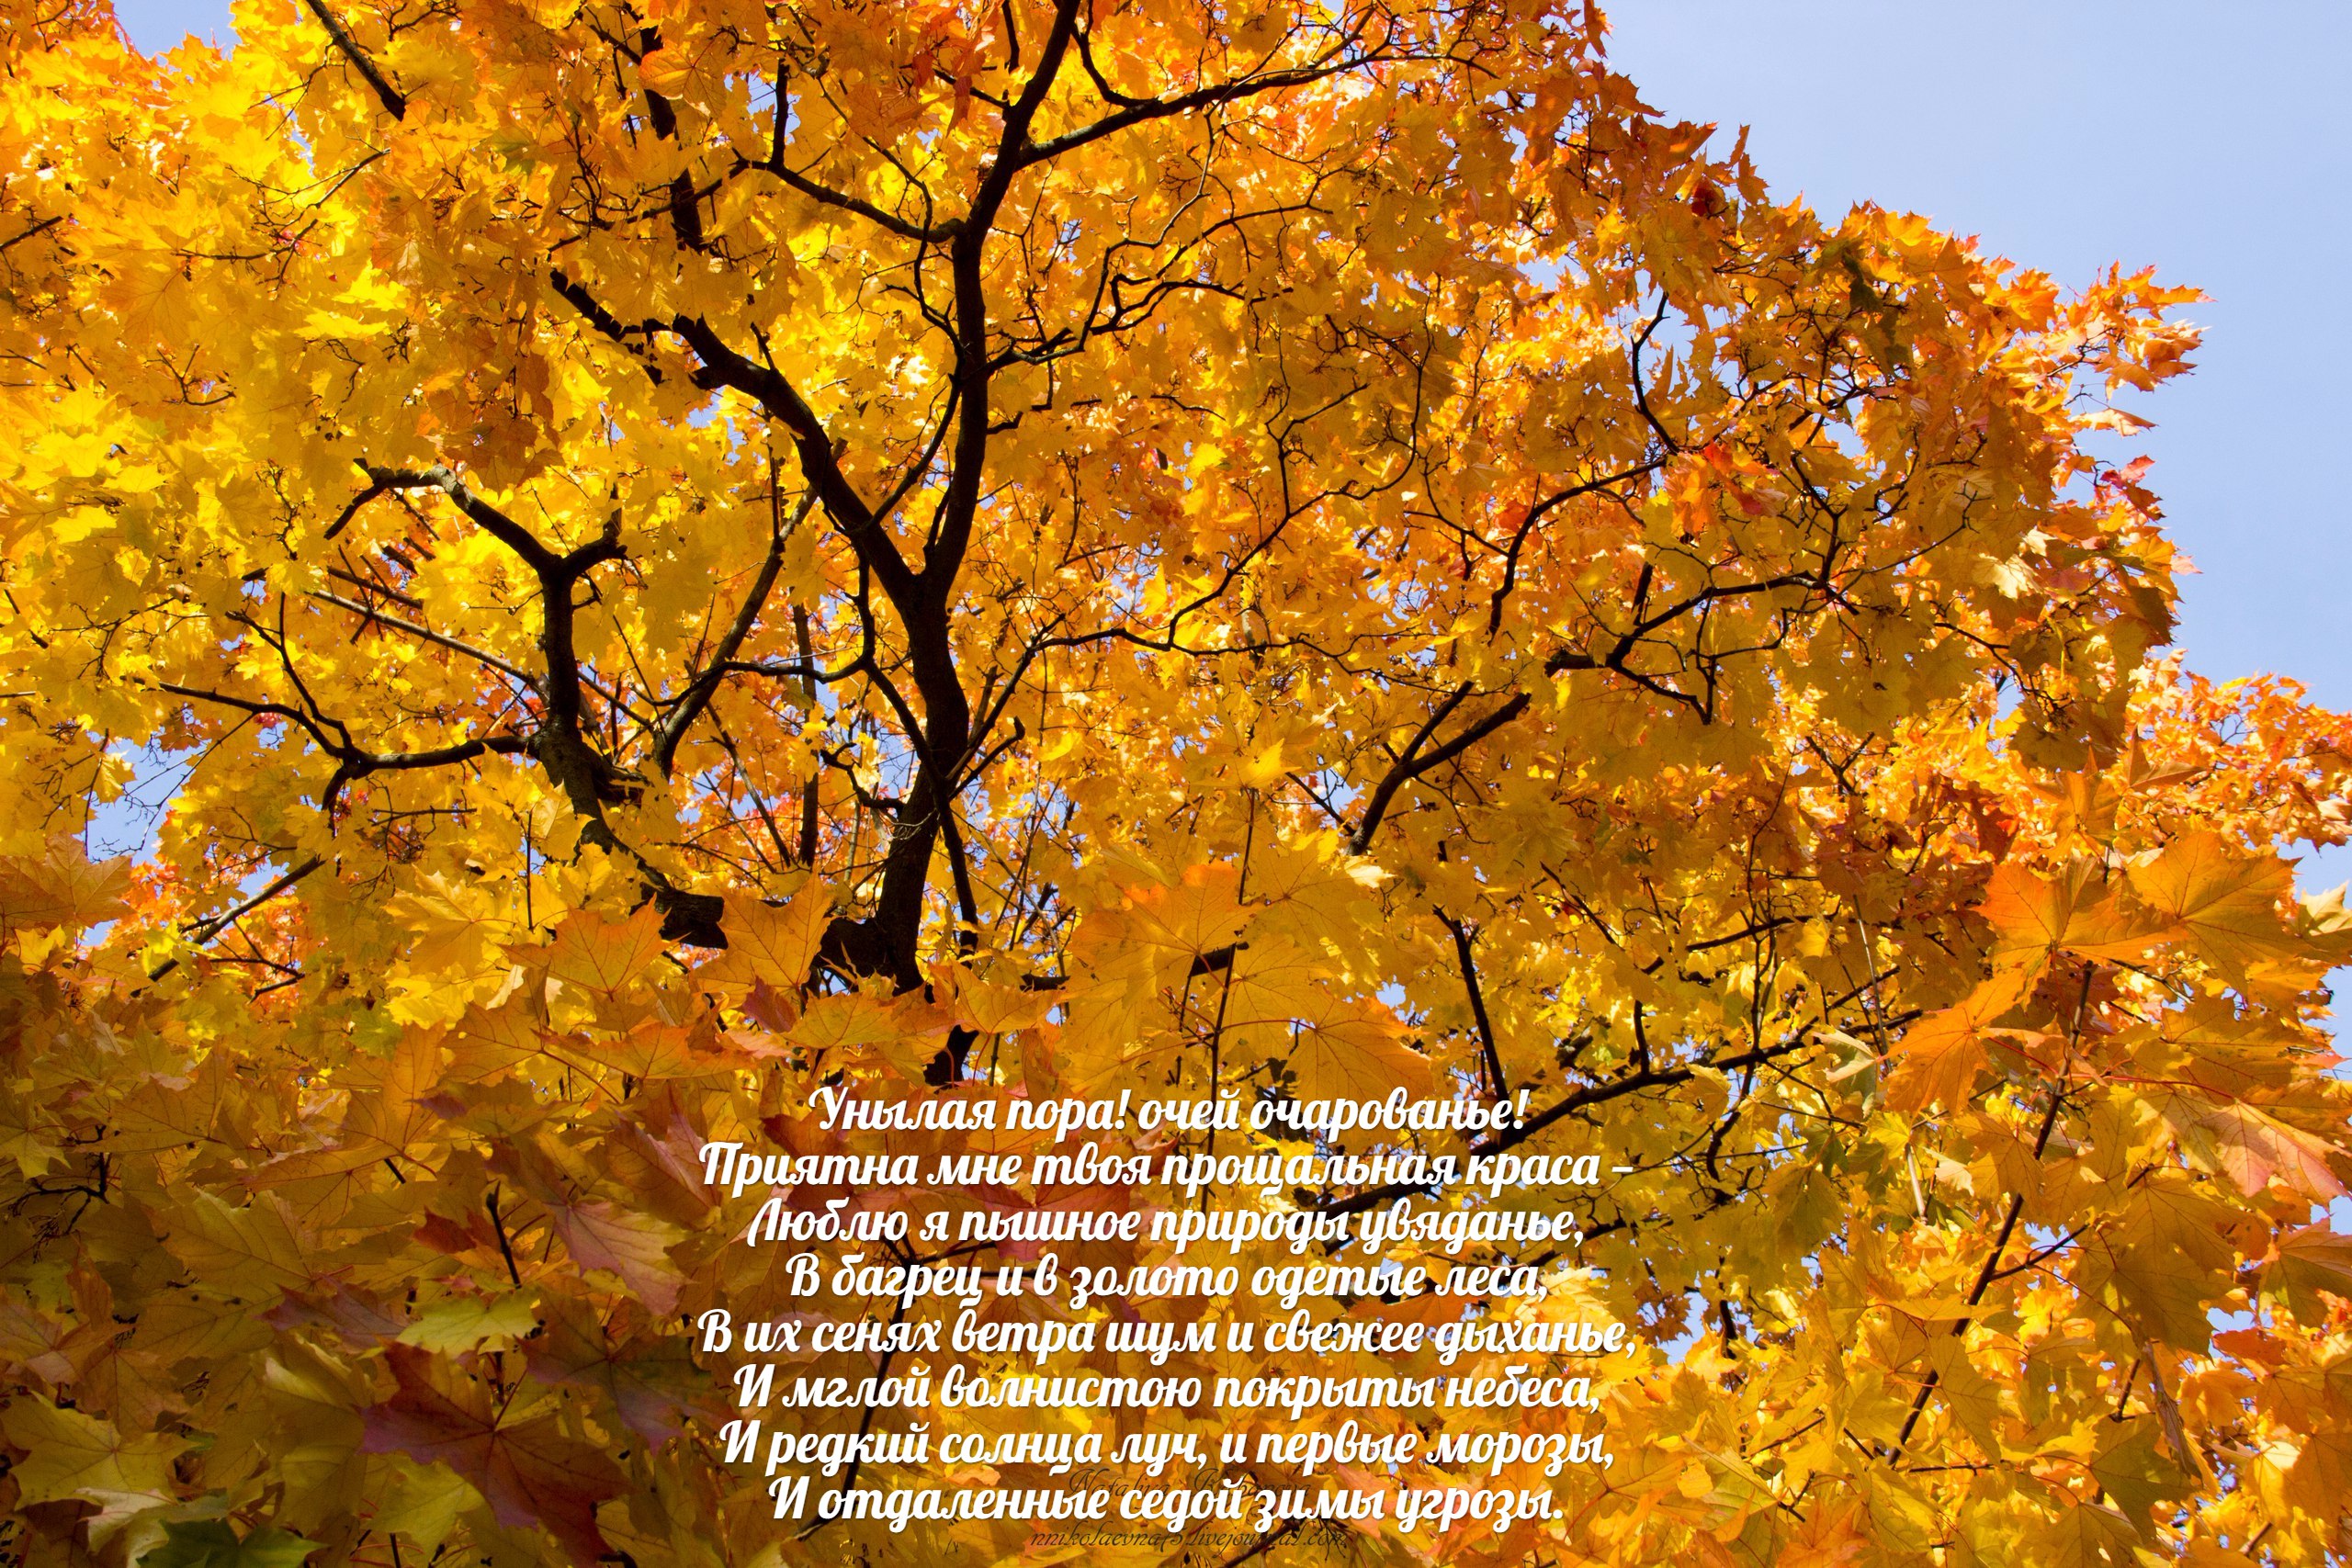 Стихи про осень - подборка красивых стихотворений про золотую осень